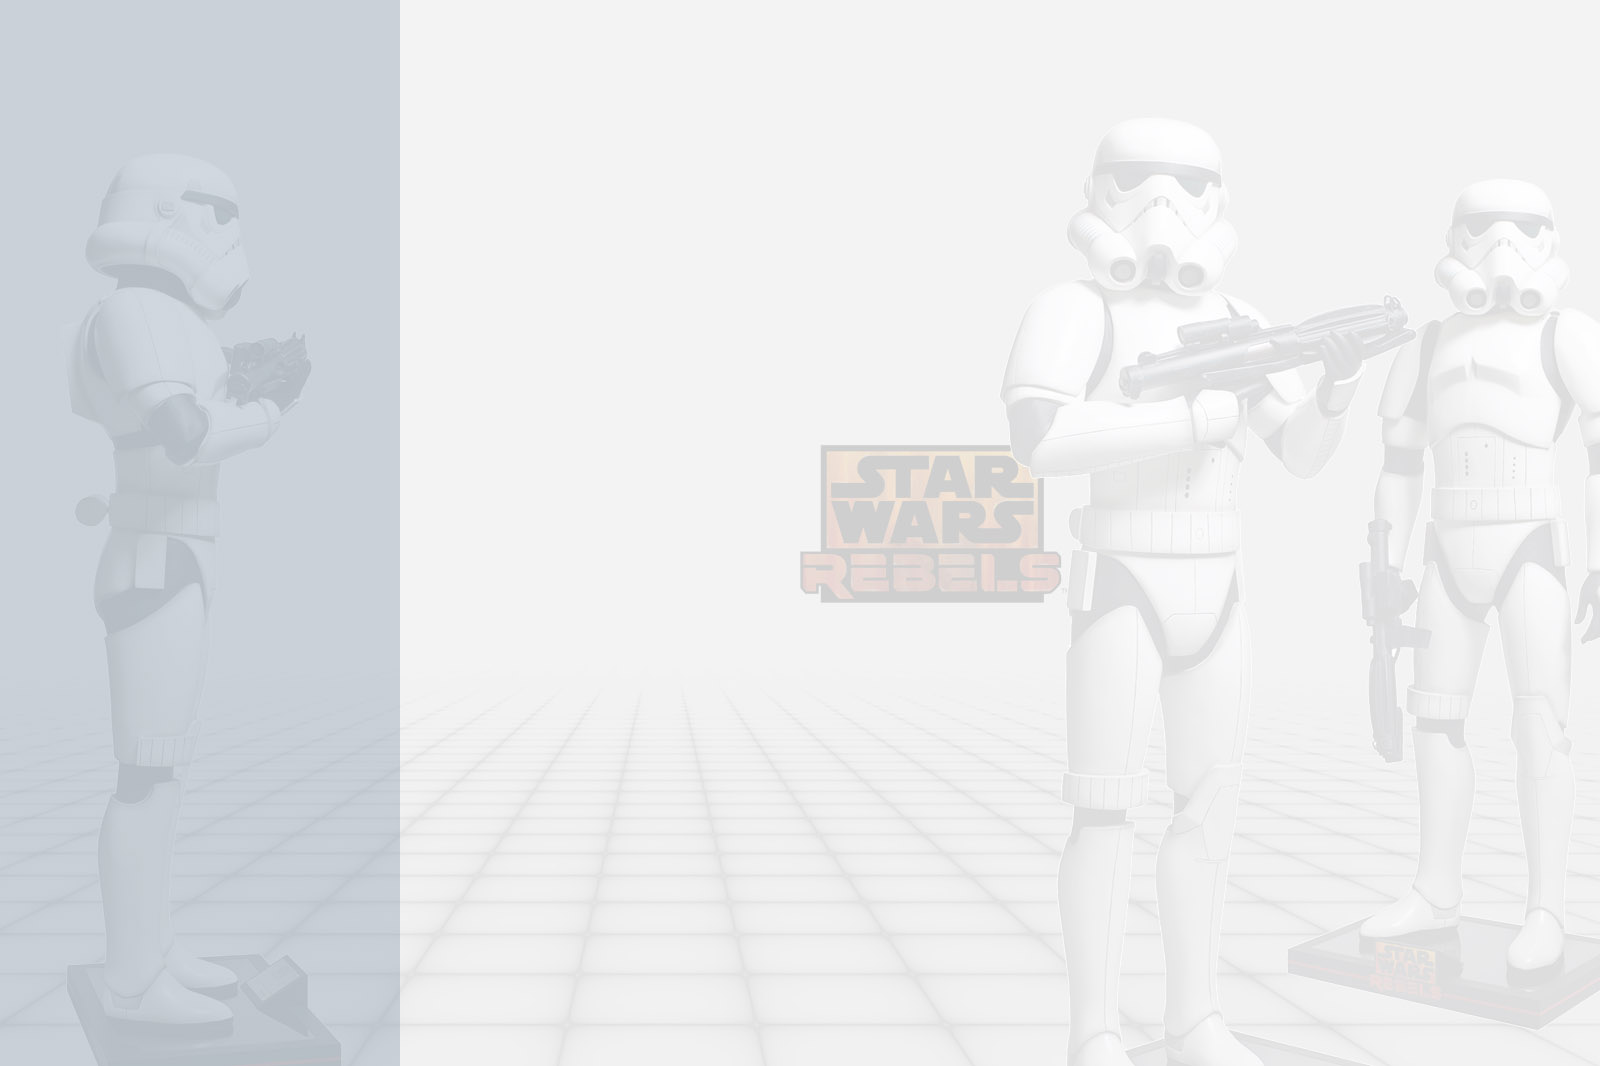 Star Wars Rebels - Stormtrooper 2